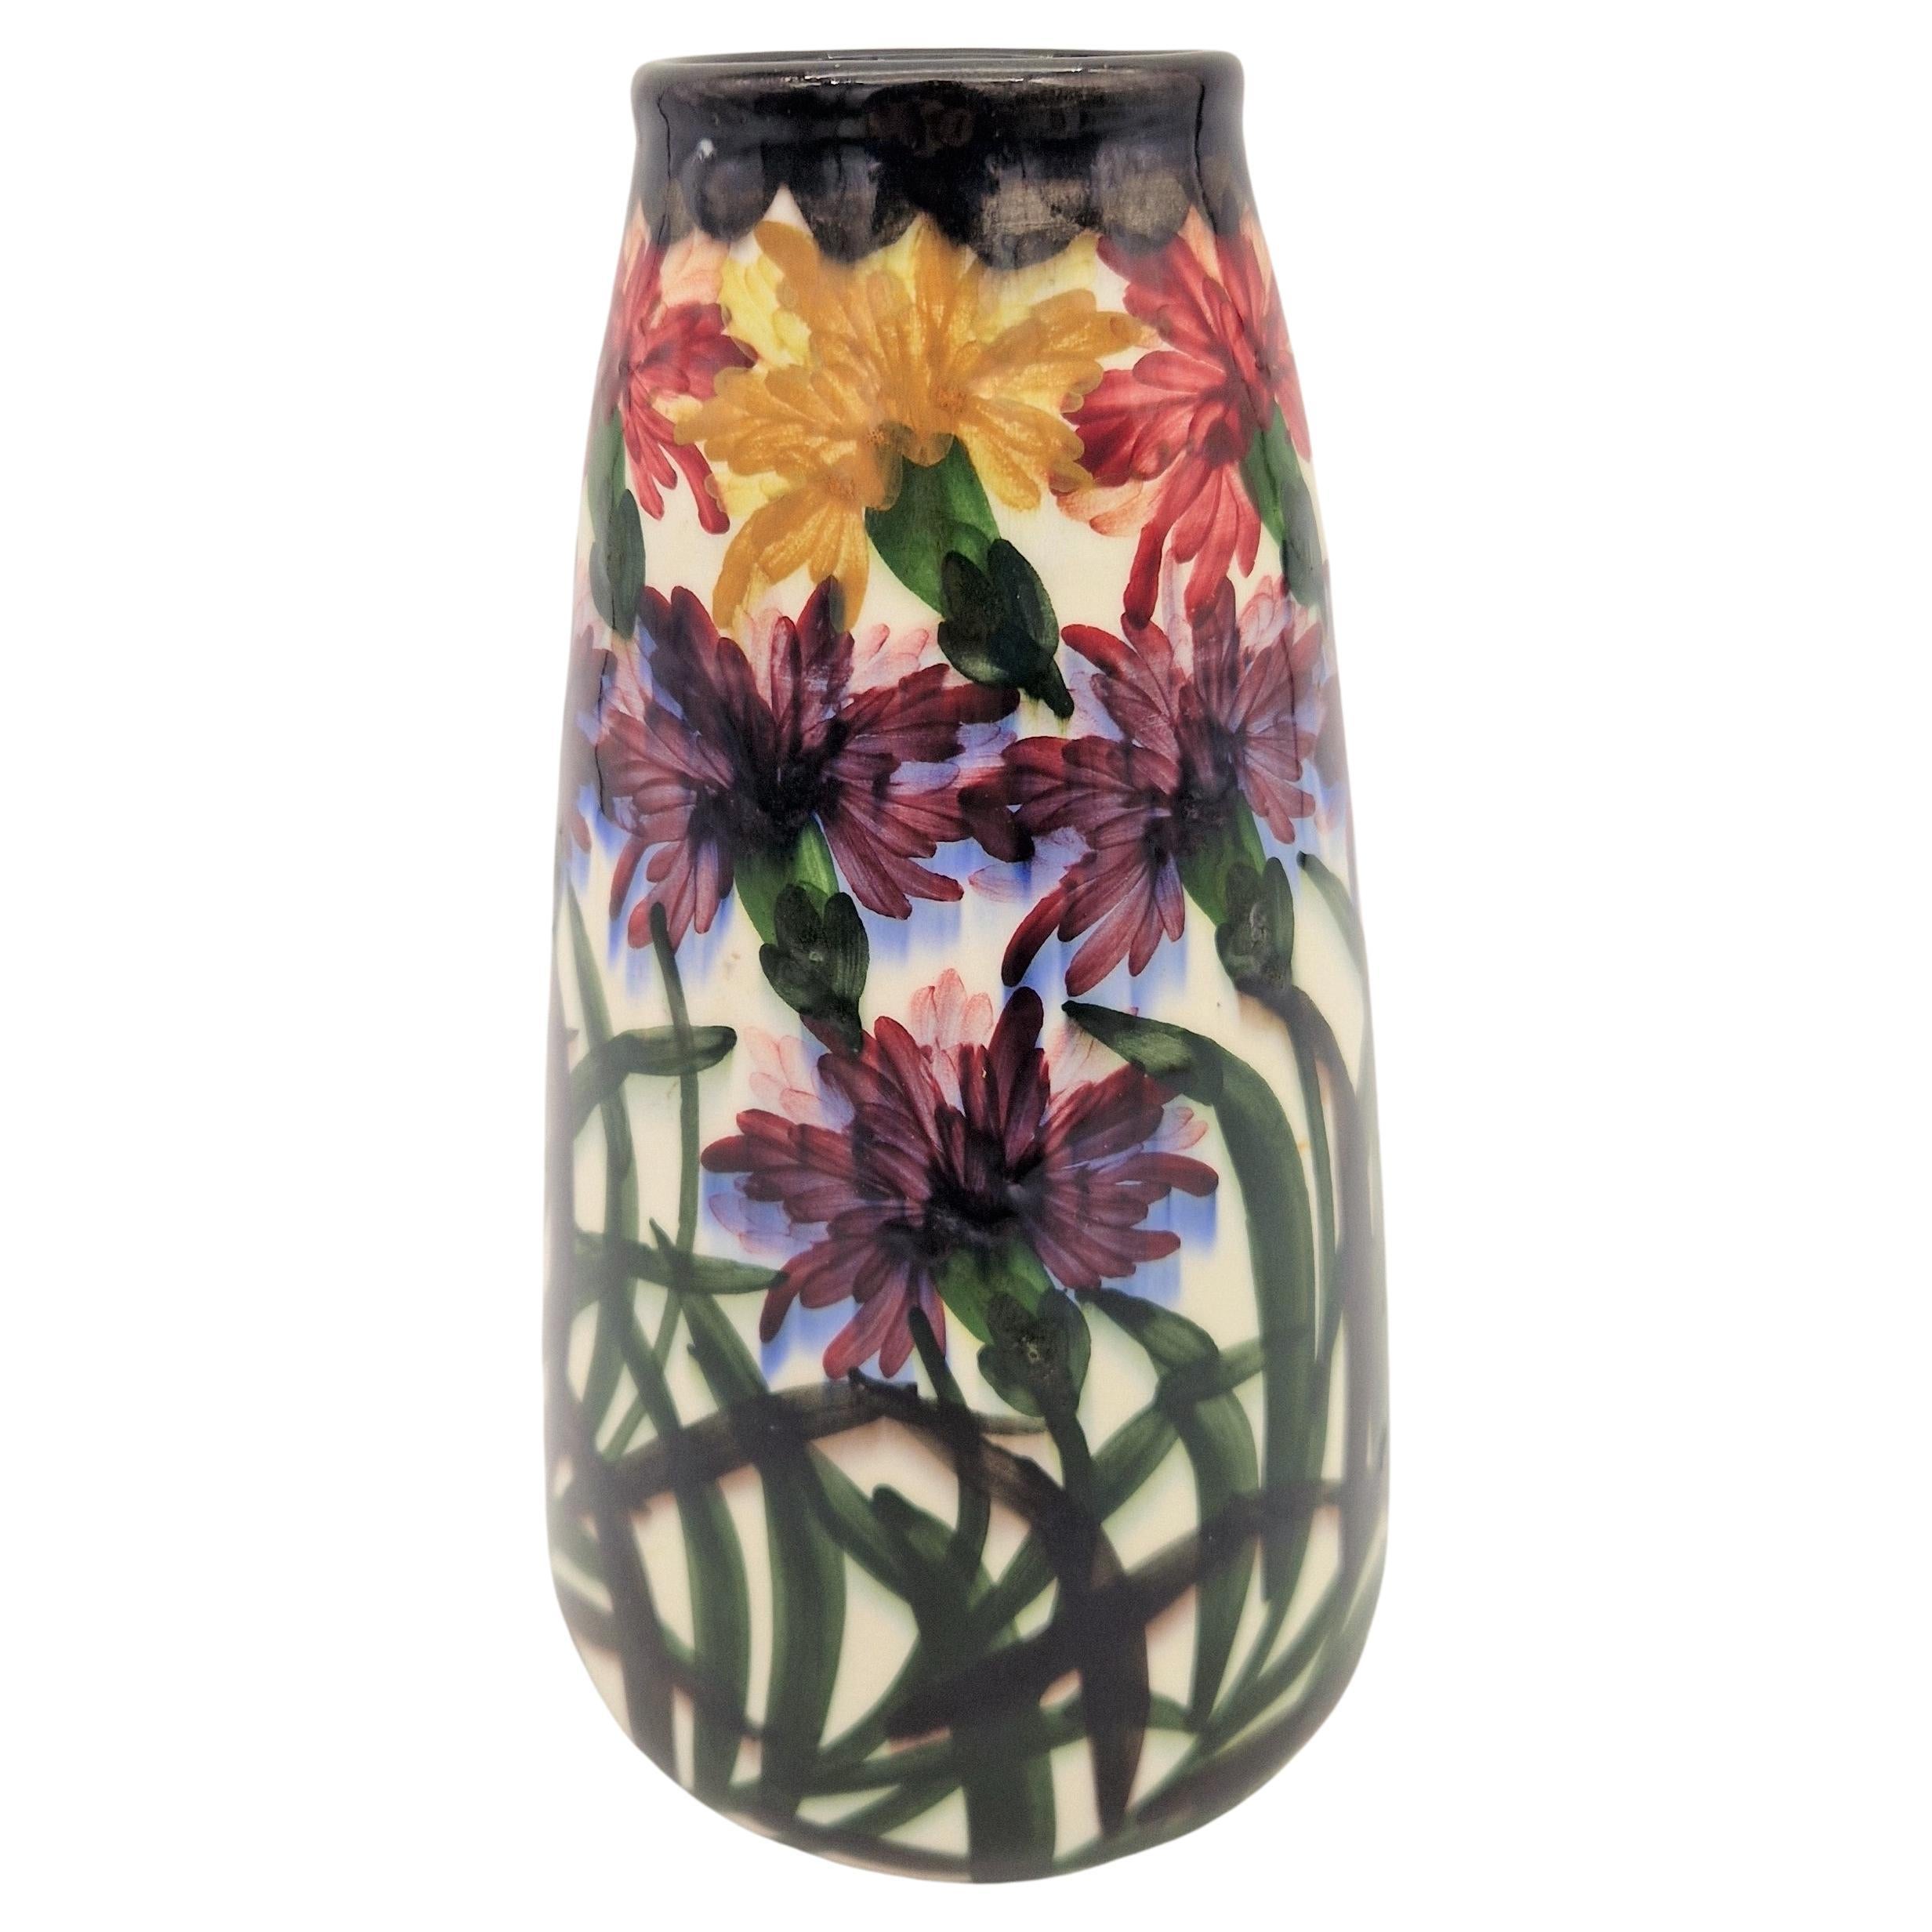 Art Nouveau ceramic vase from Schramberg. 1900 - 1920